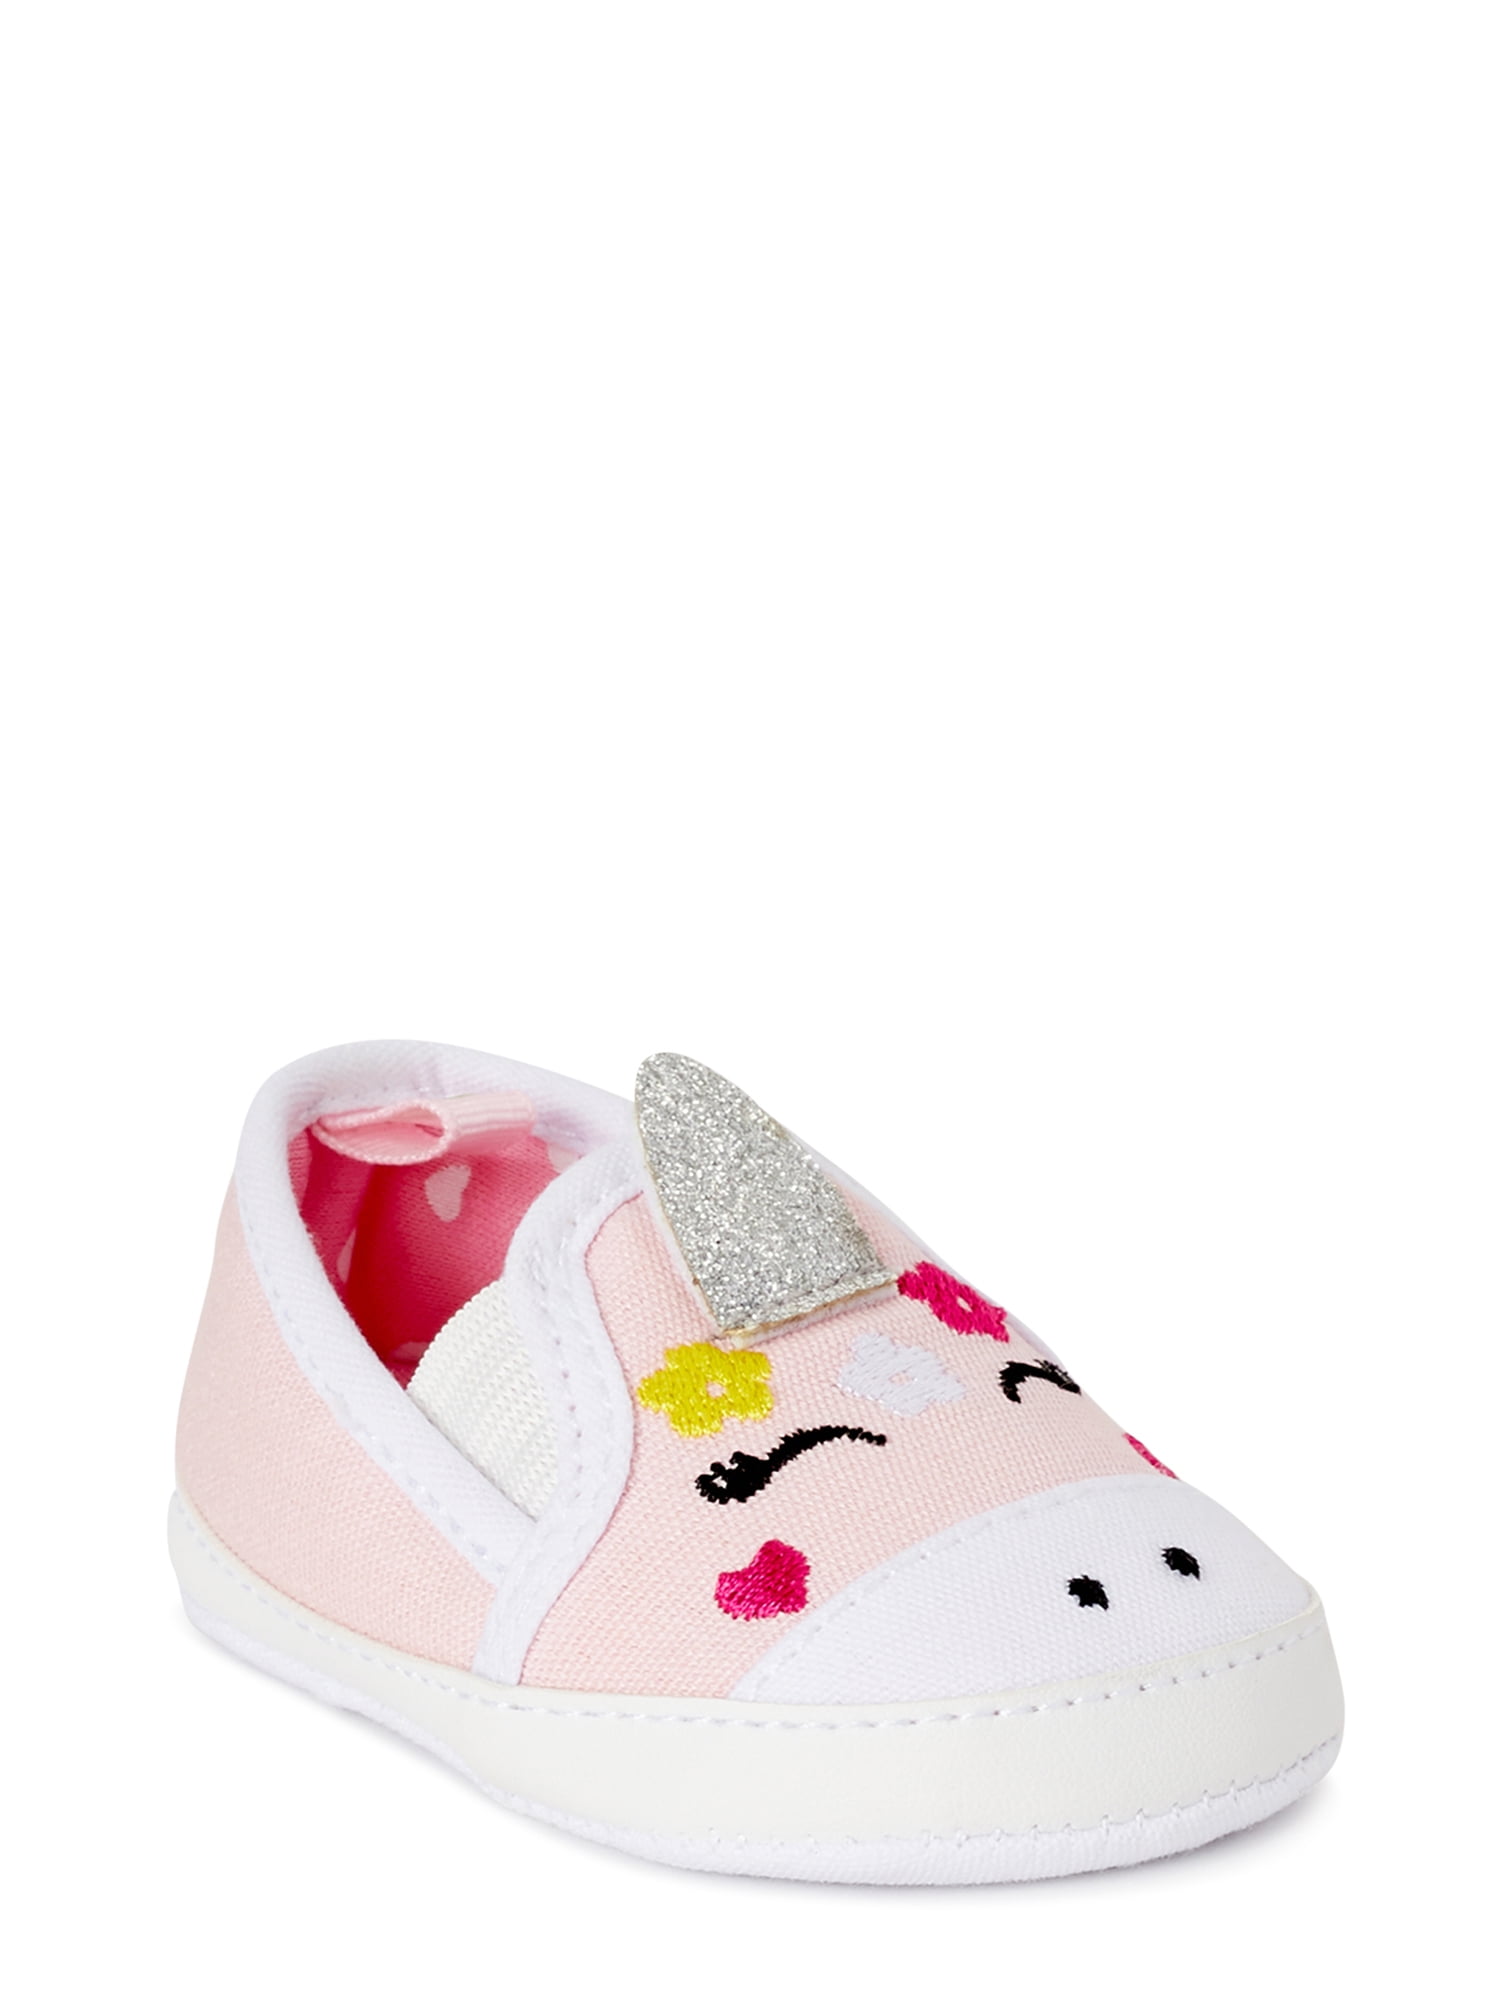 baby crib shoes